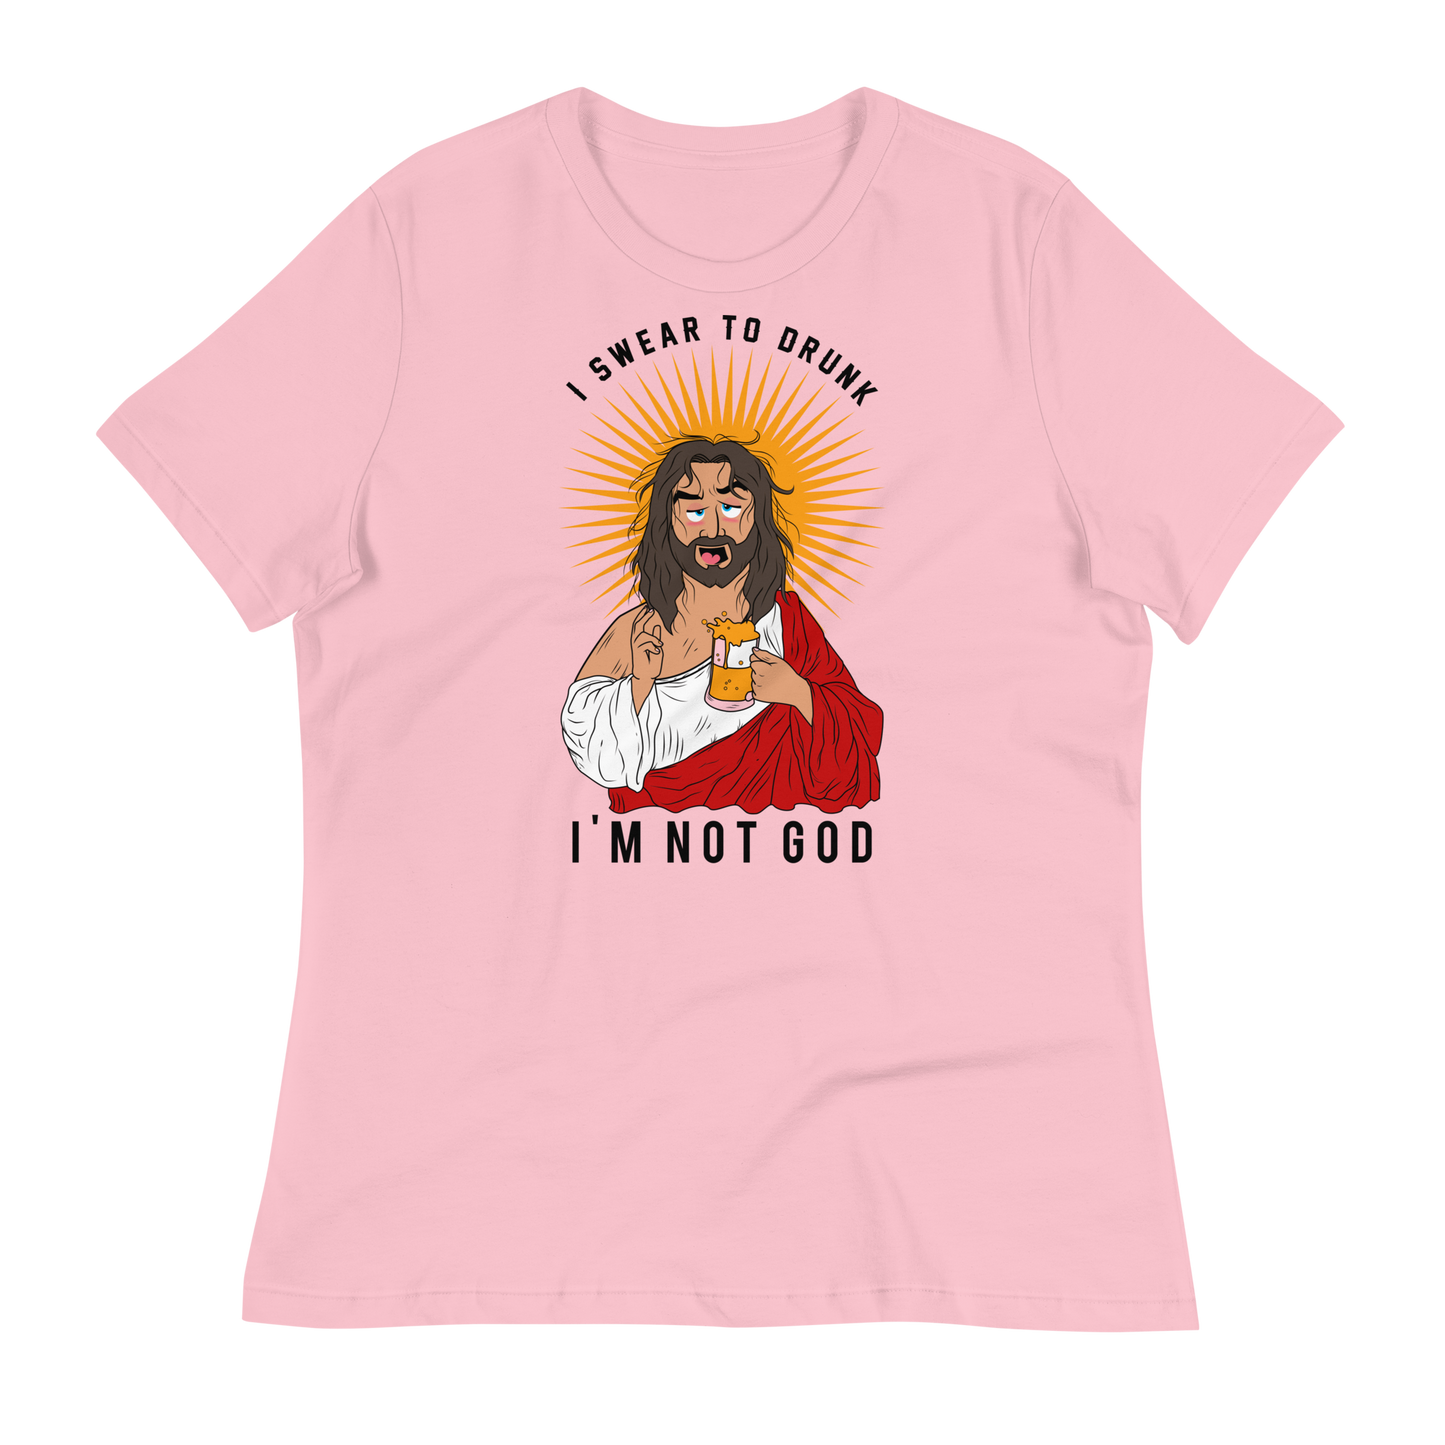 A-Hole "Drunk Jesus" Women's Relaxed T-Shirt